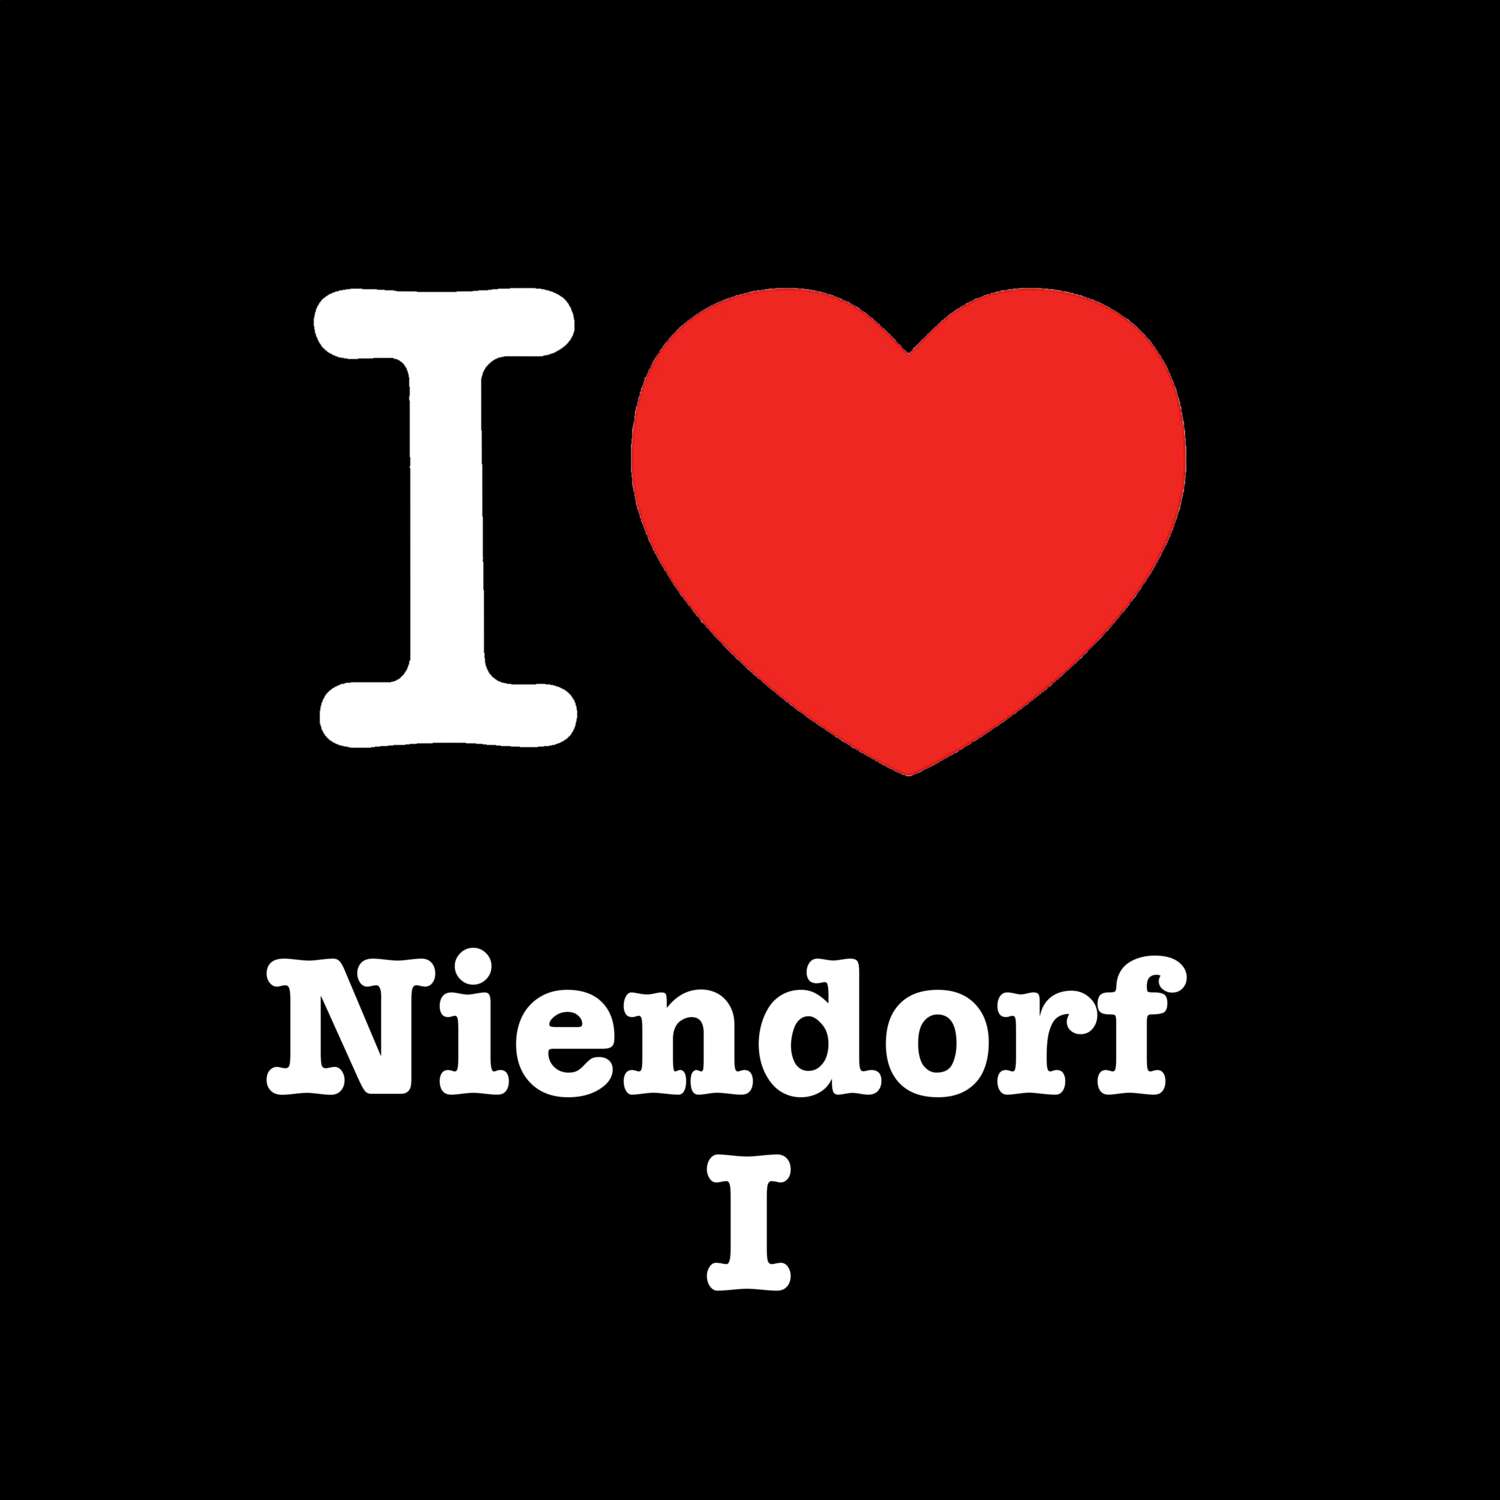 Niendorf I T-Shirt »I love«